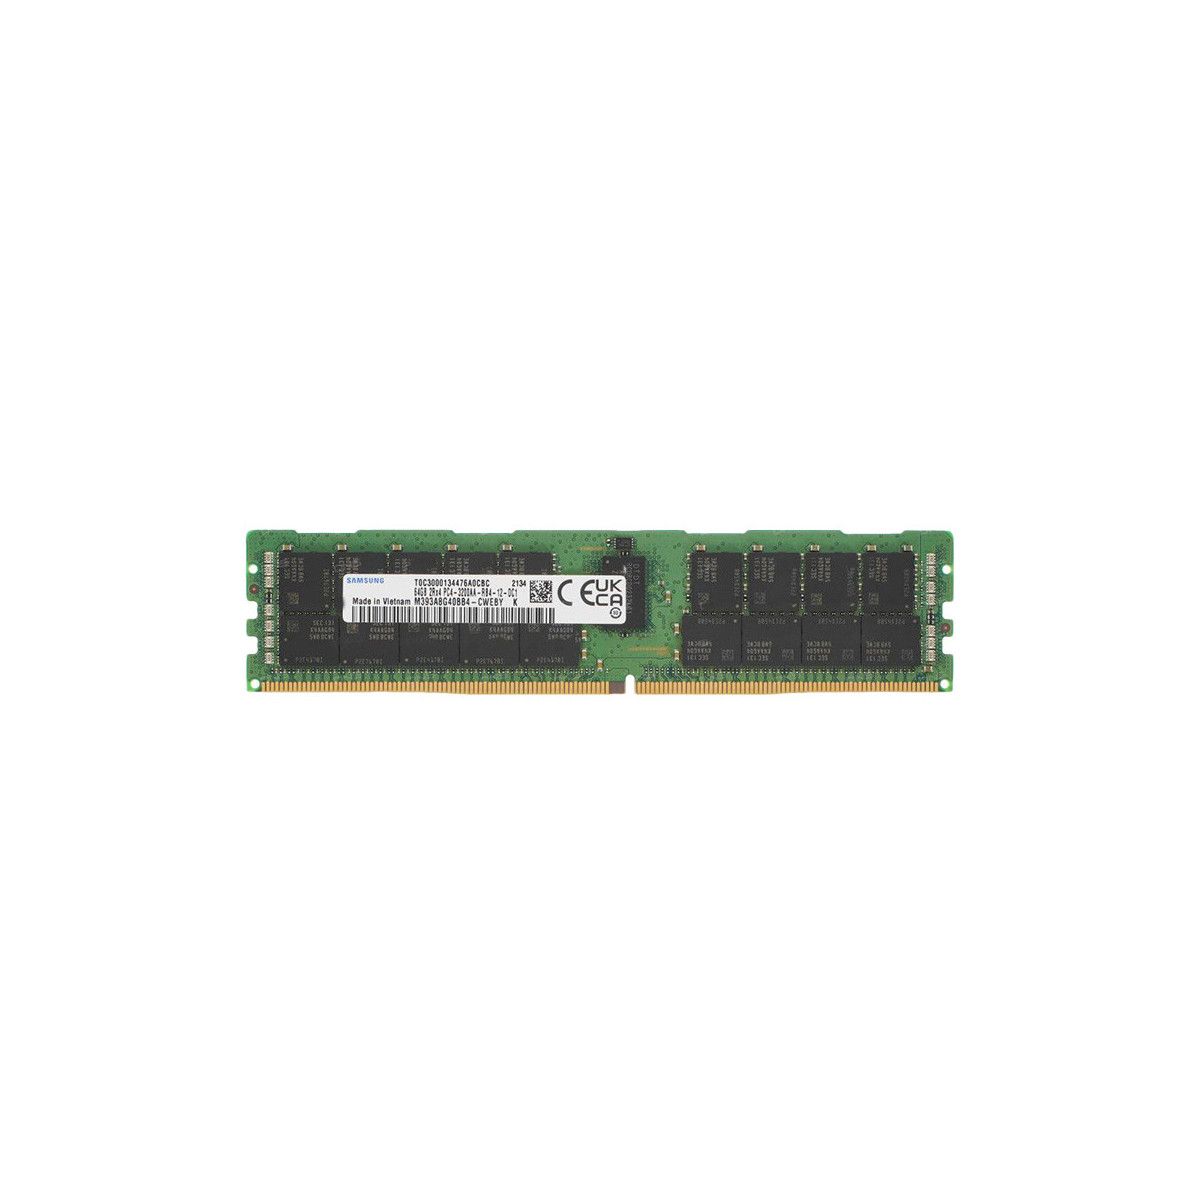 P07650-H21-MS - Memstar 1x 64GB DDR4-3200 RDIMM PC4-25600R - Mem-star Kompatybilna pamięć OEM 1 - Memstar 